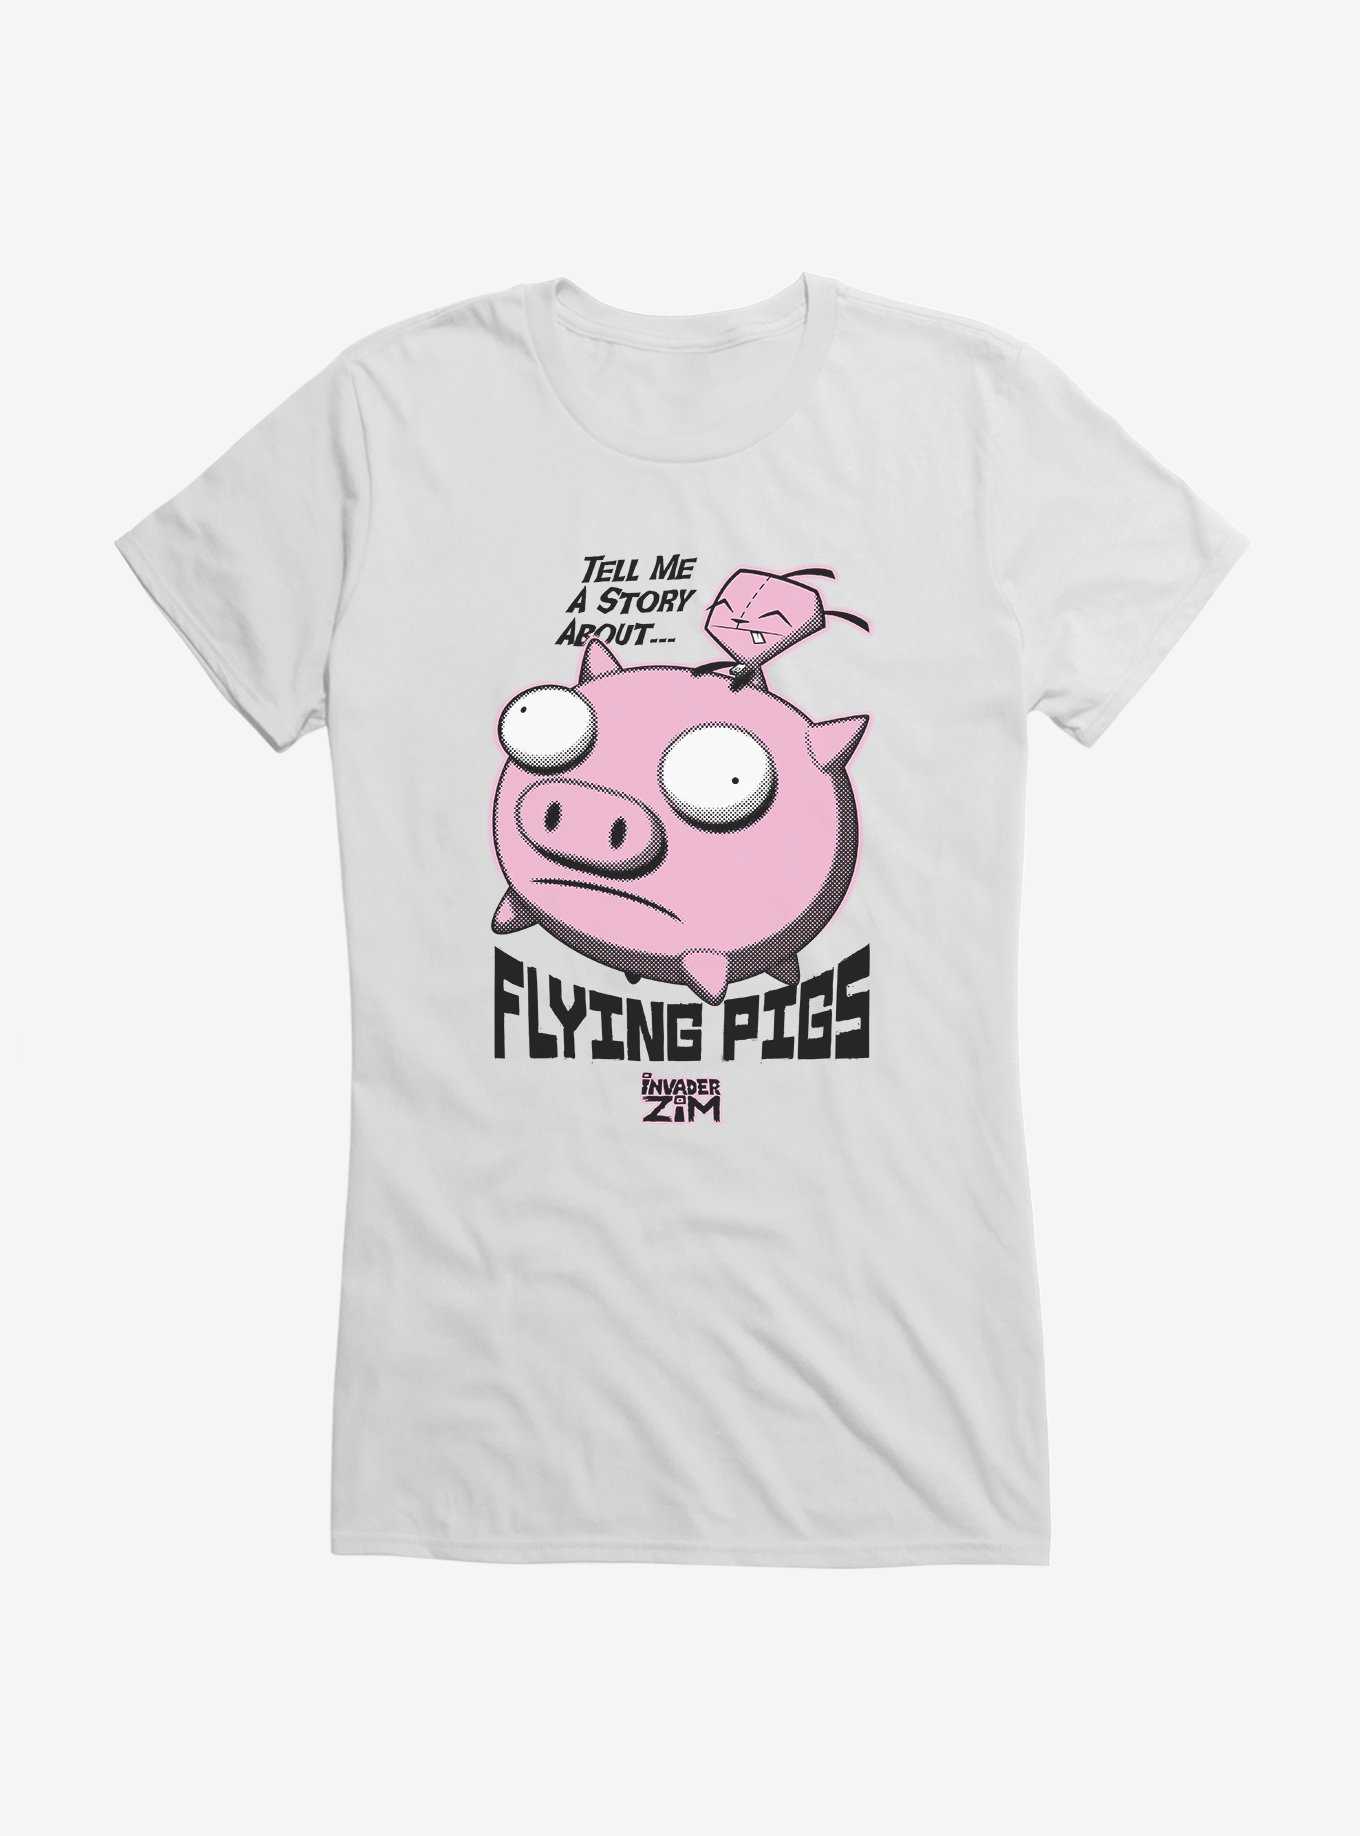 Invader Zim Gir Riding A Flying Pig Girls T-Shirt, , hi-res